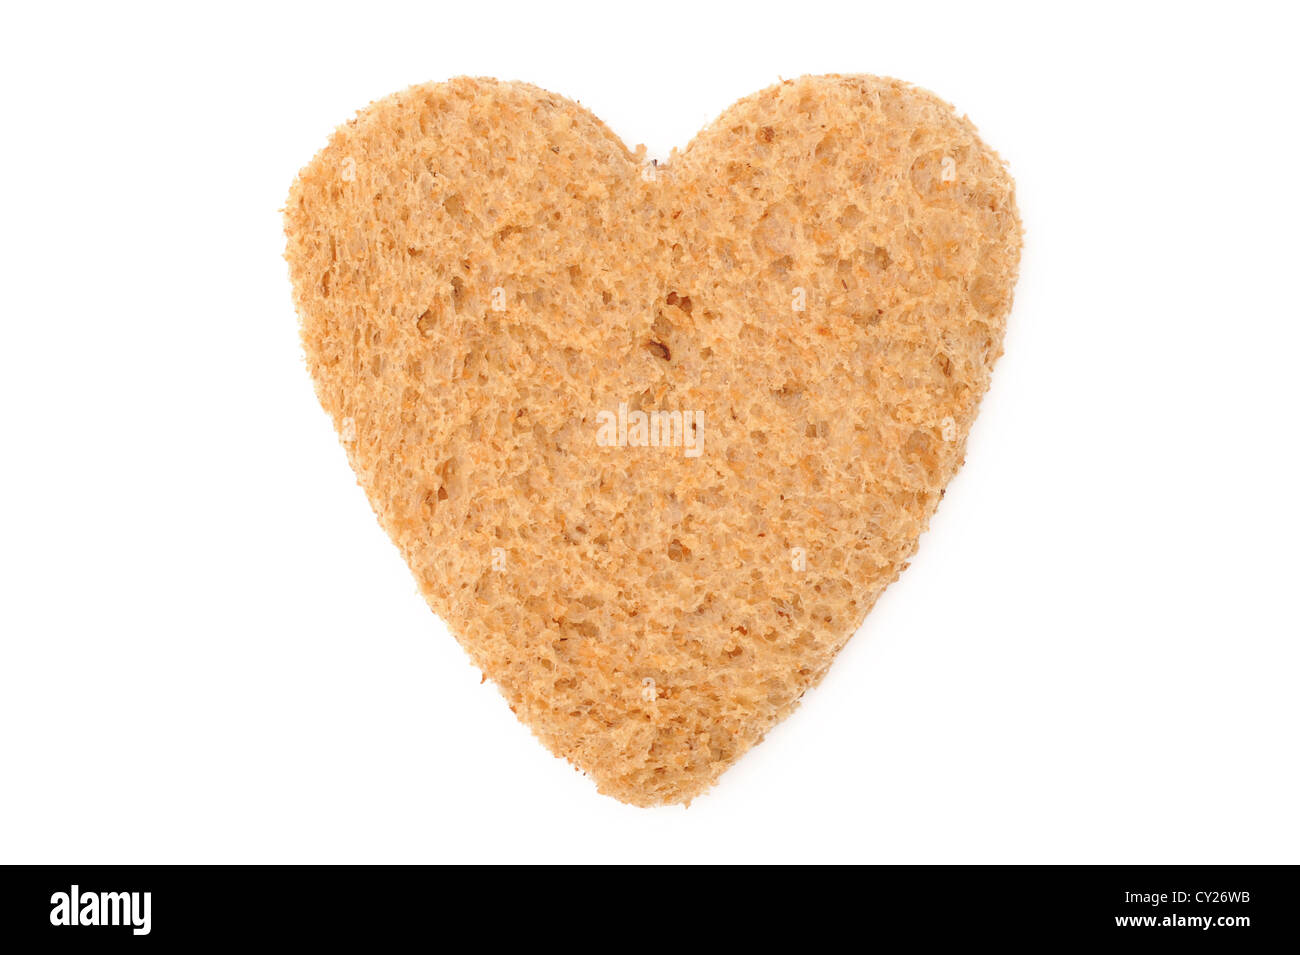 Heart shaped wholemeal bread Stock Photo